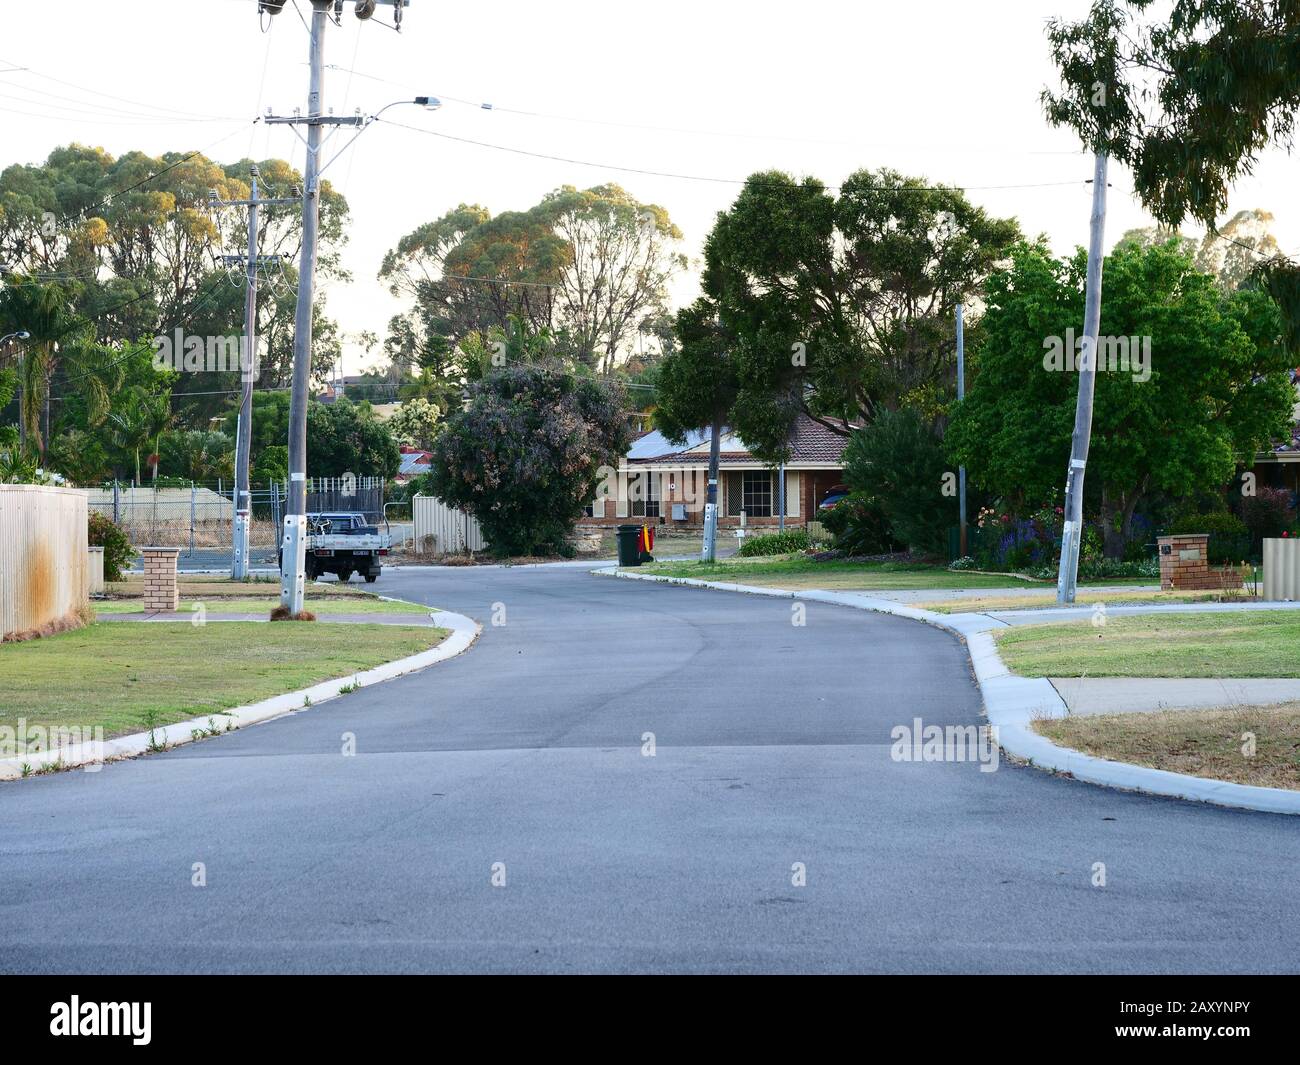 Urban street and landscape seen in Beldon, a suburb of Perth, Western Australia. Stock Photo